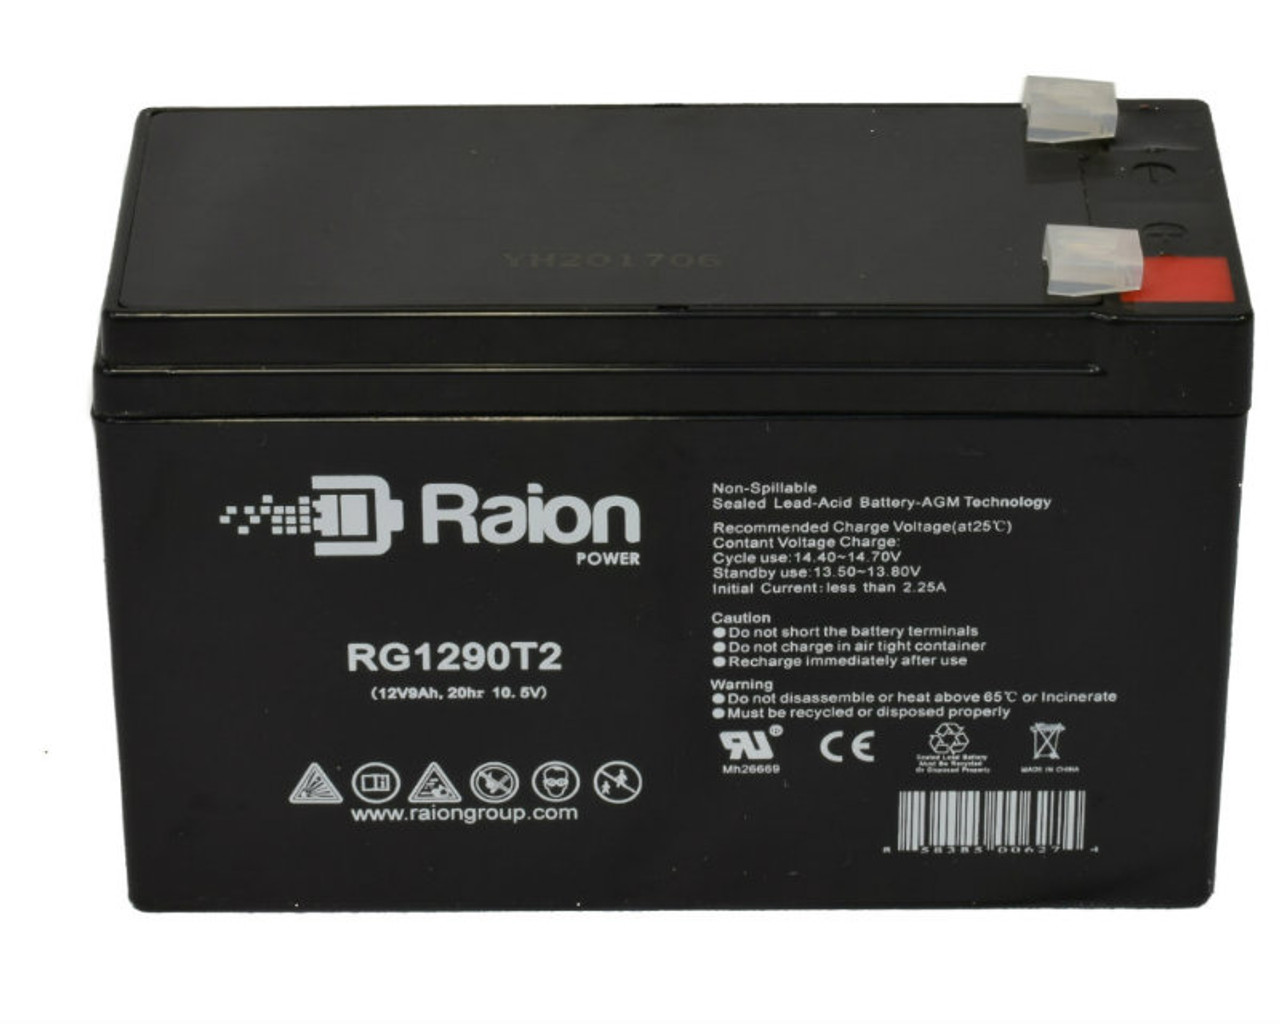 Raion Power RG1290T2 12V 9Ah Lead Acid Battery for Garmin Fish Finder 90 GPS